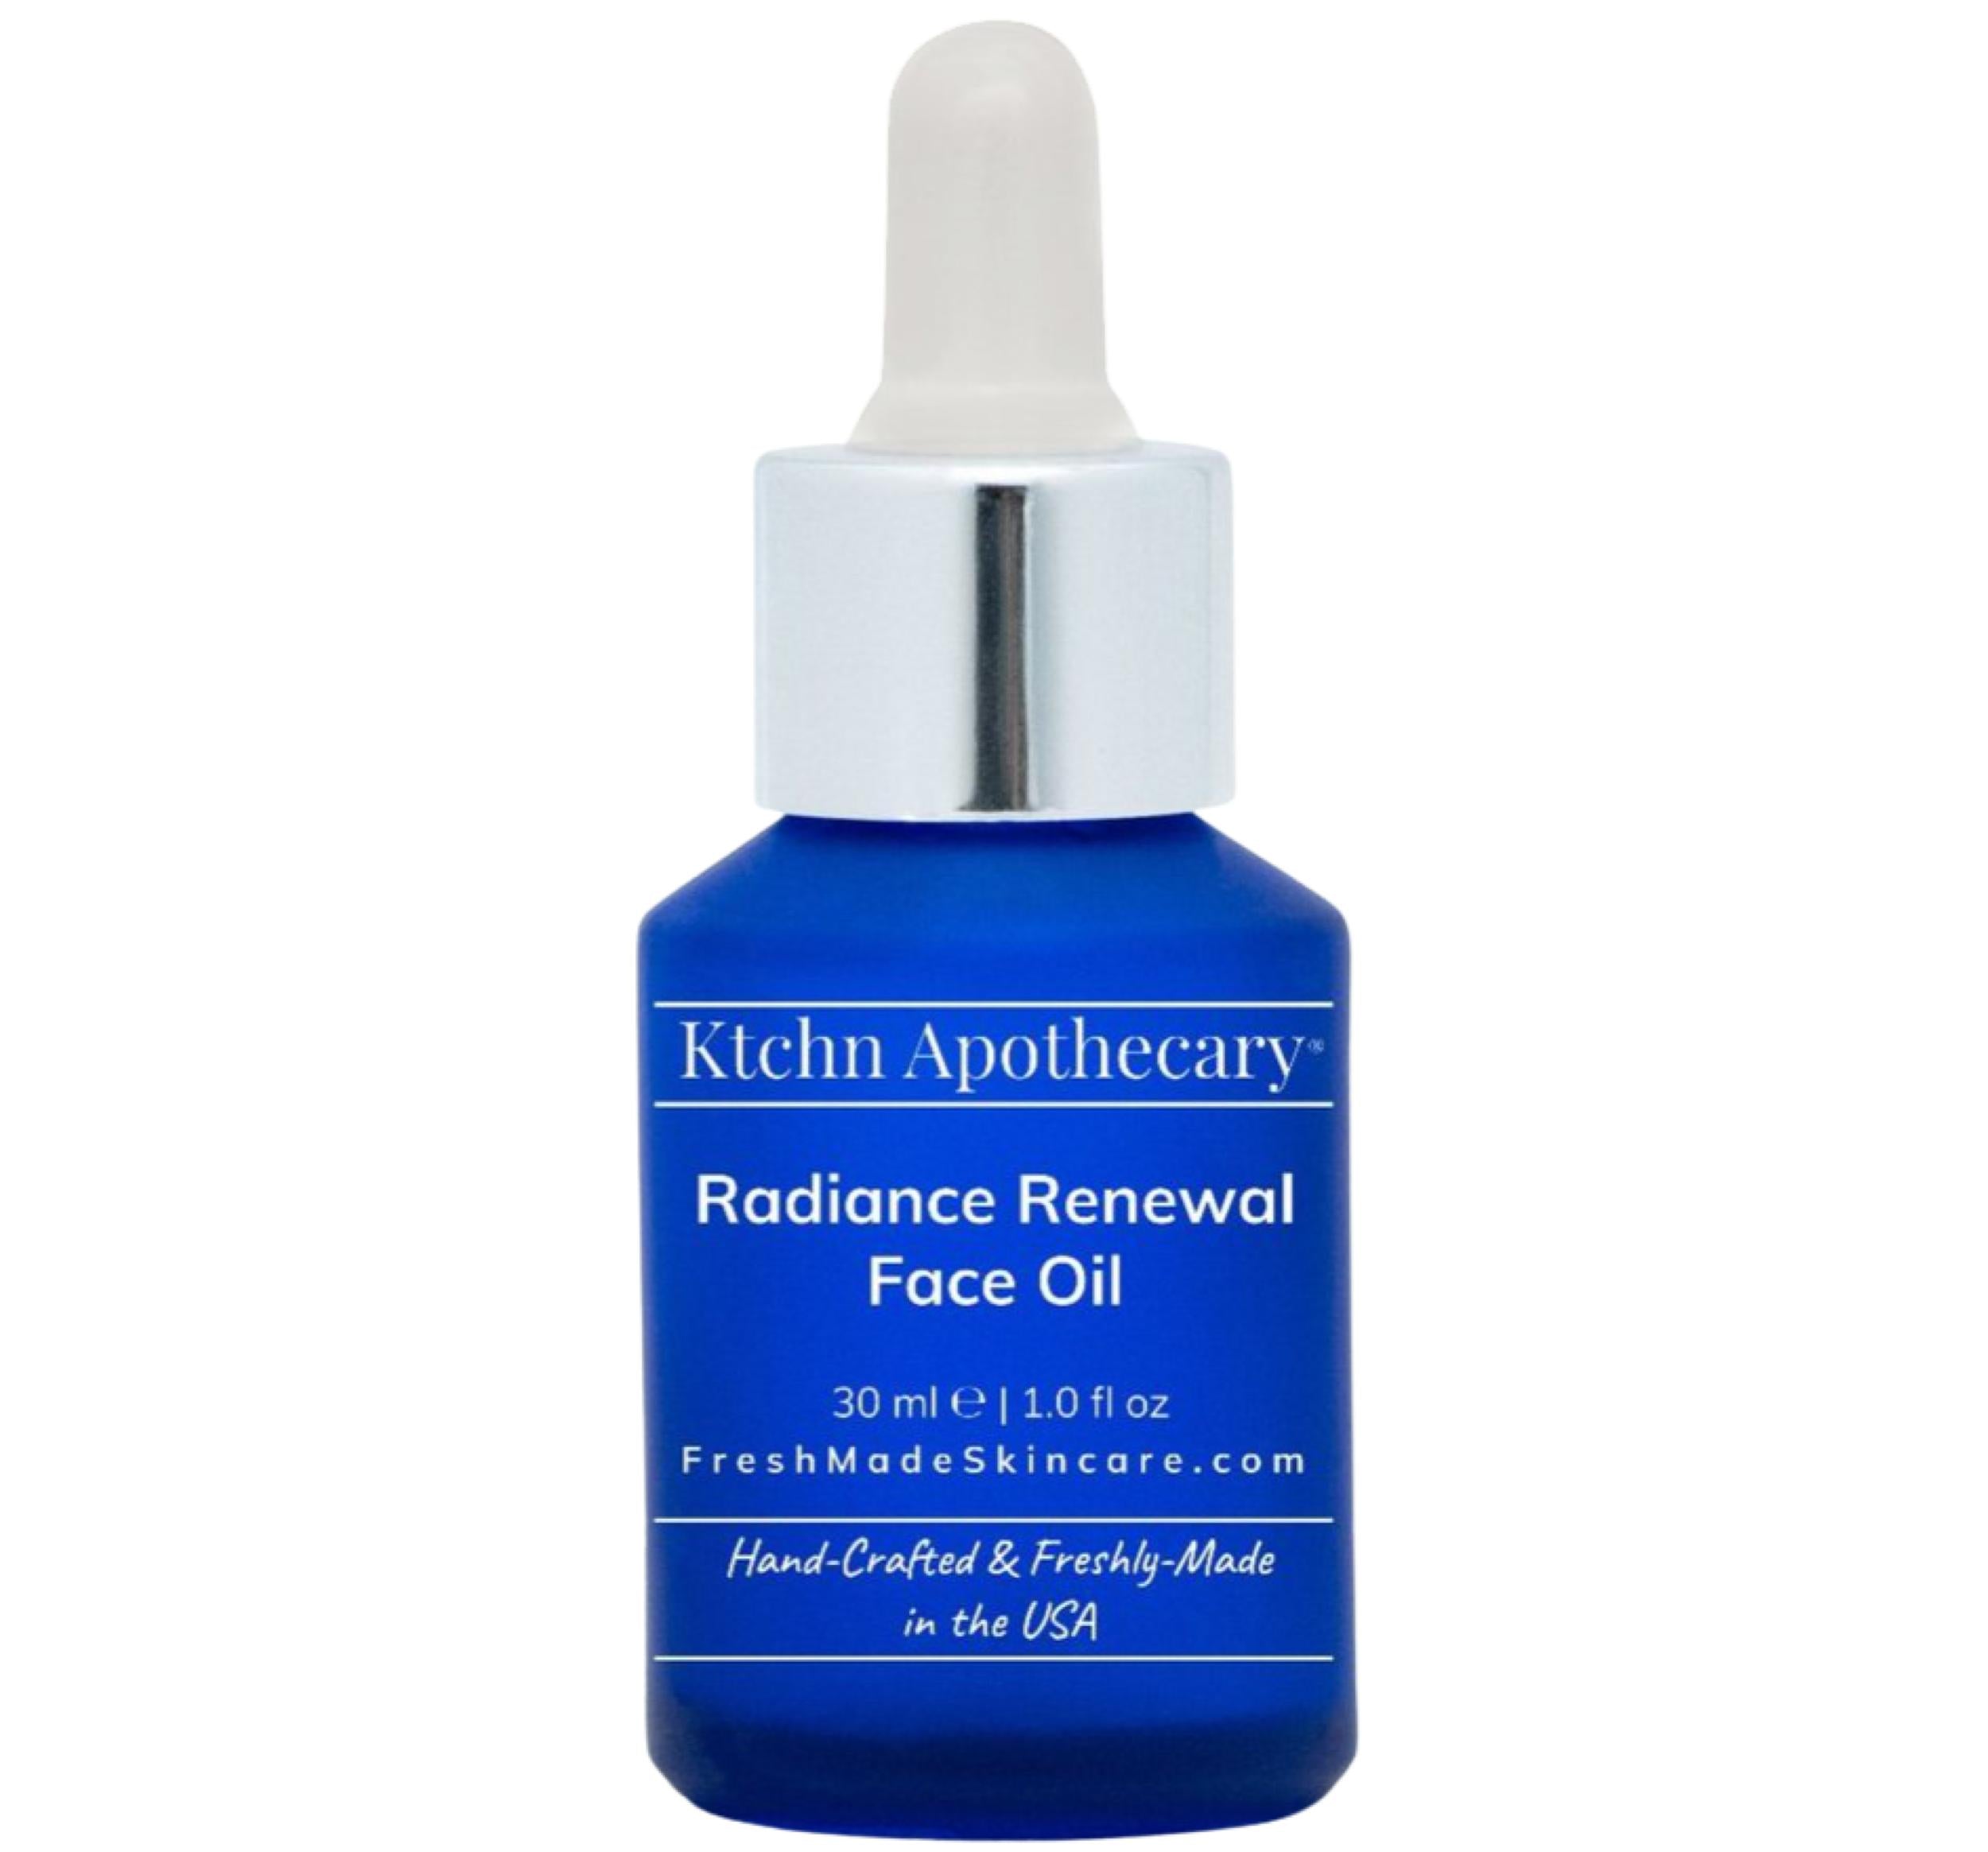 Radiance Renewal Face Oil